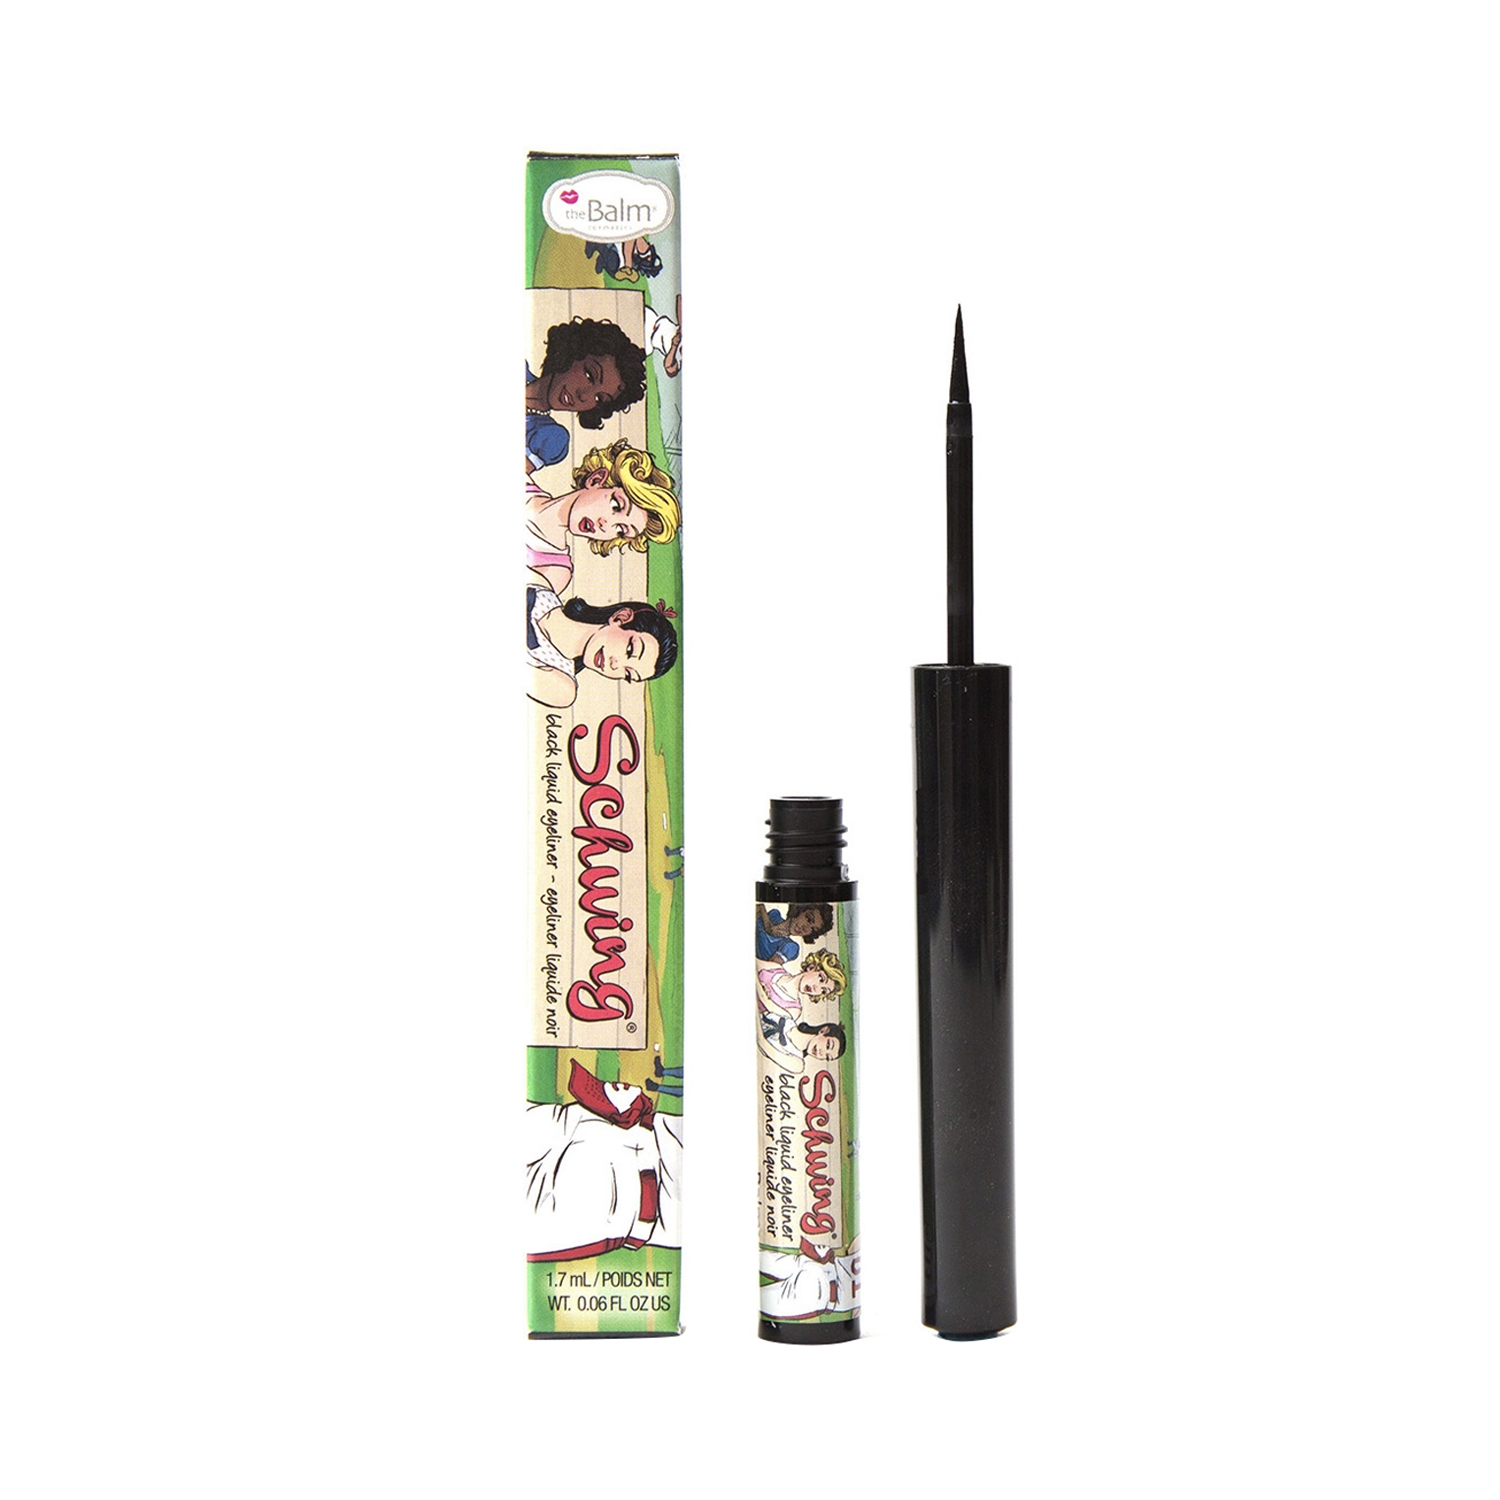 theBalm Cosmetics | theBalm Cosmetics Schwing Liquid Eyeliner - Black (1.7ml)